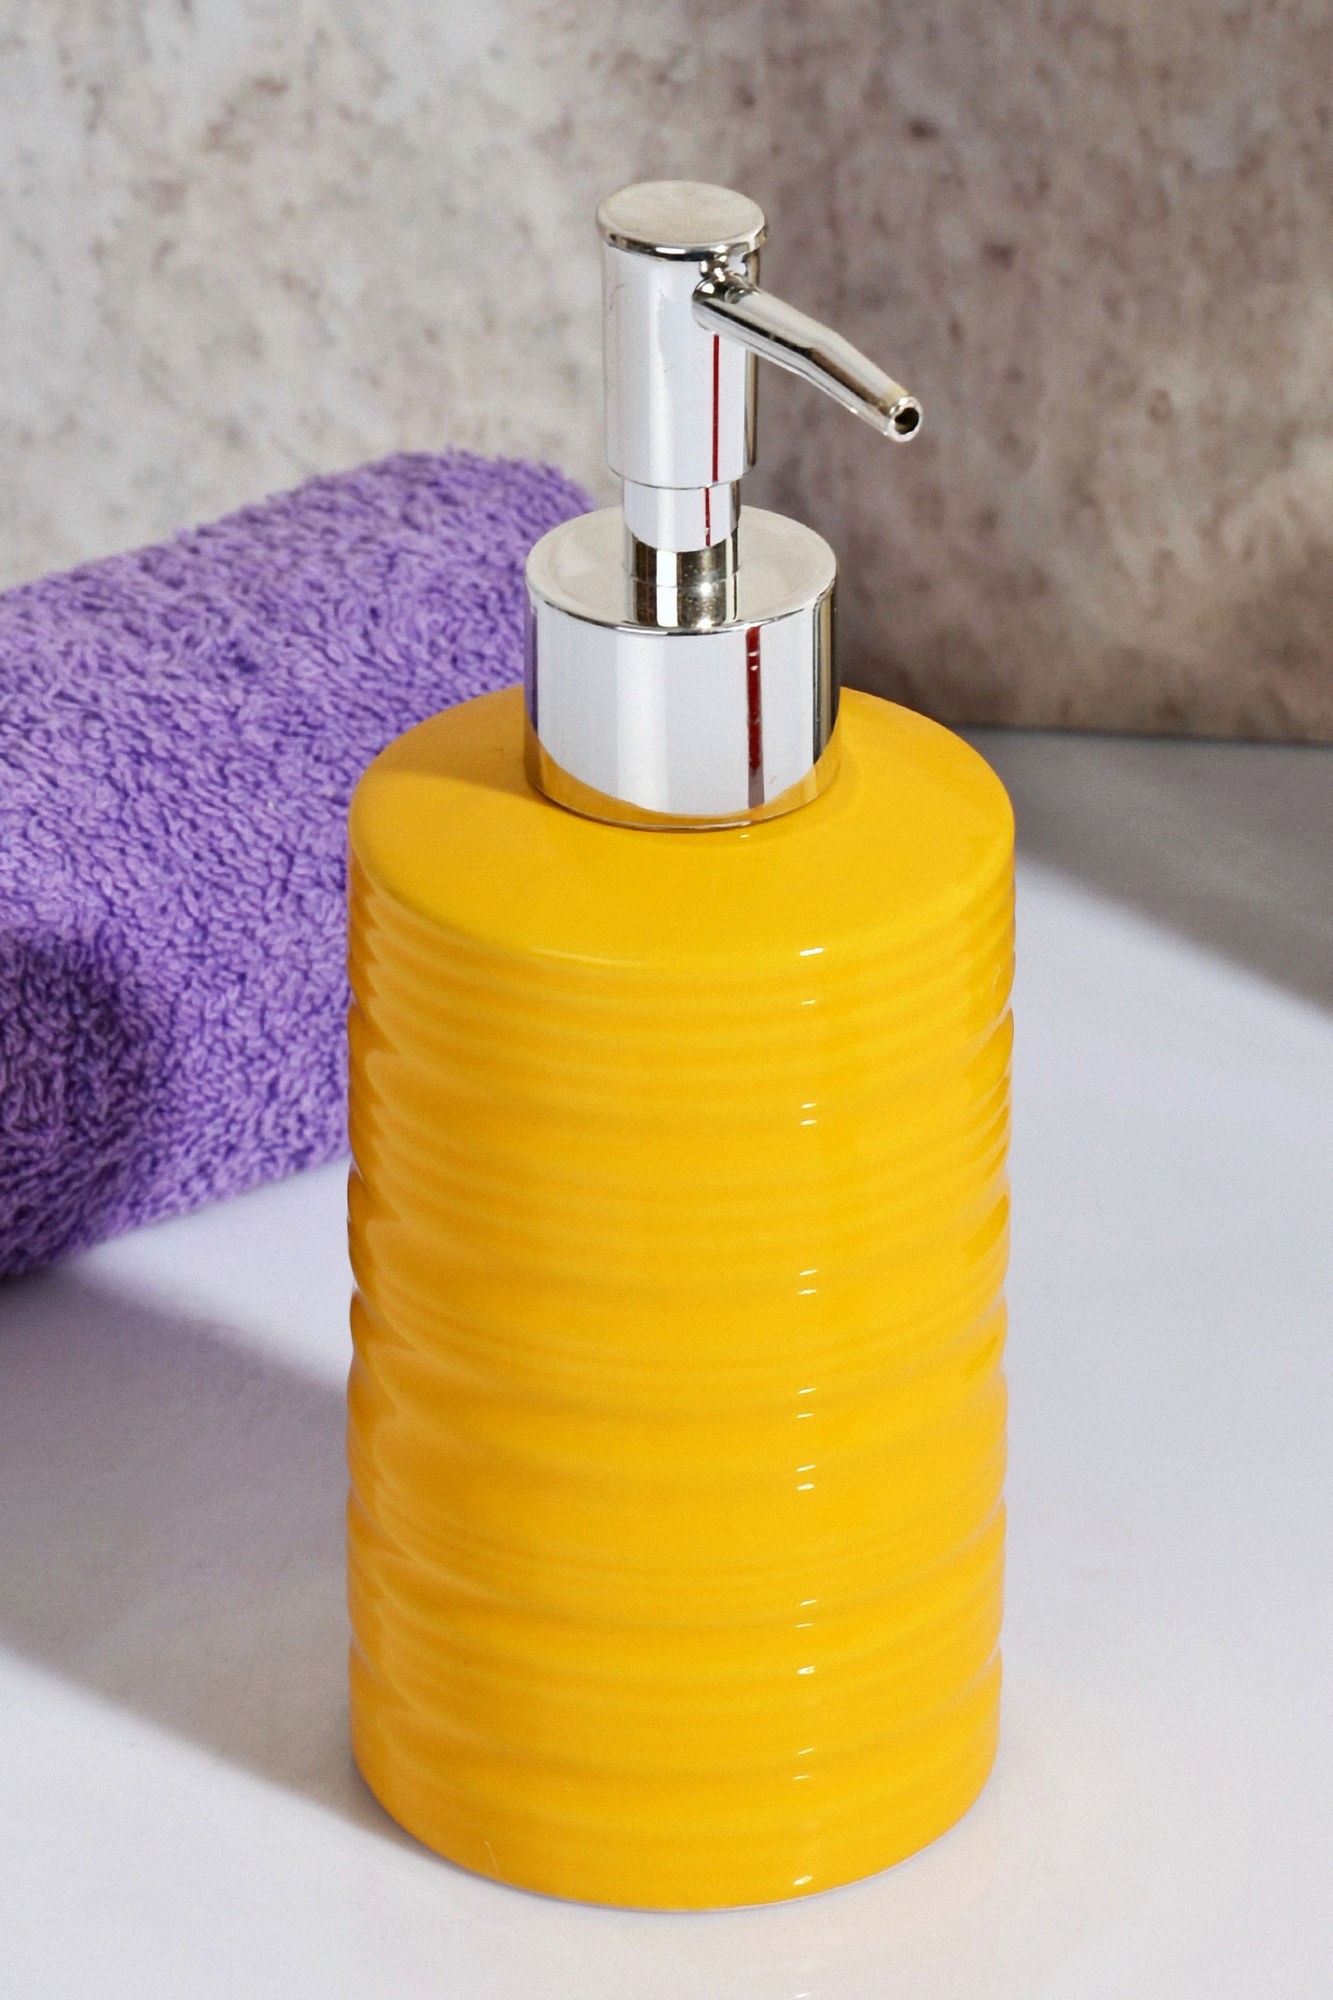 Dose of modern ser 0047 yellow soap dispenser